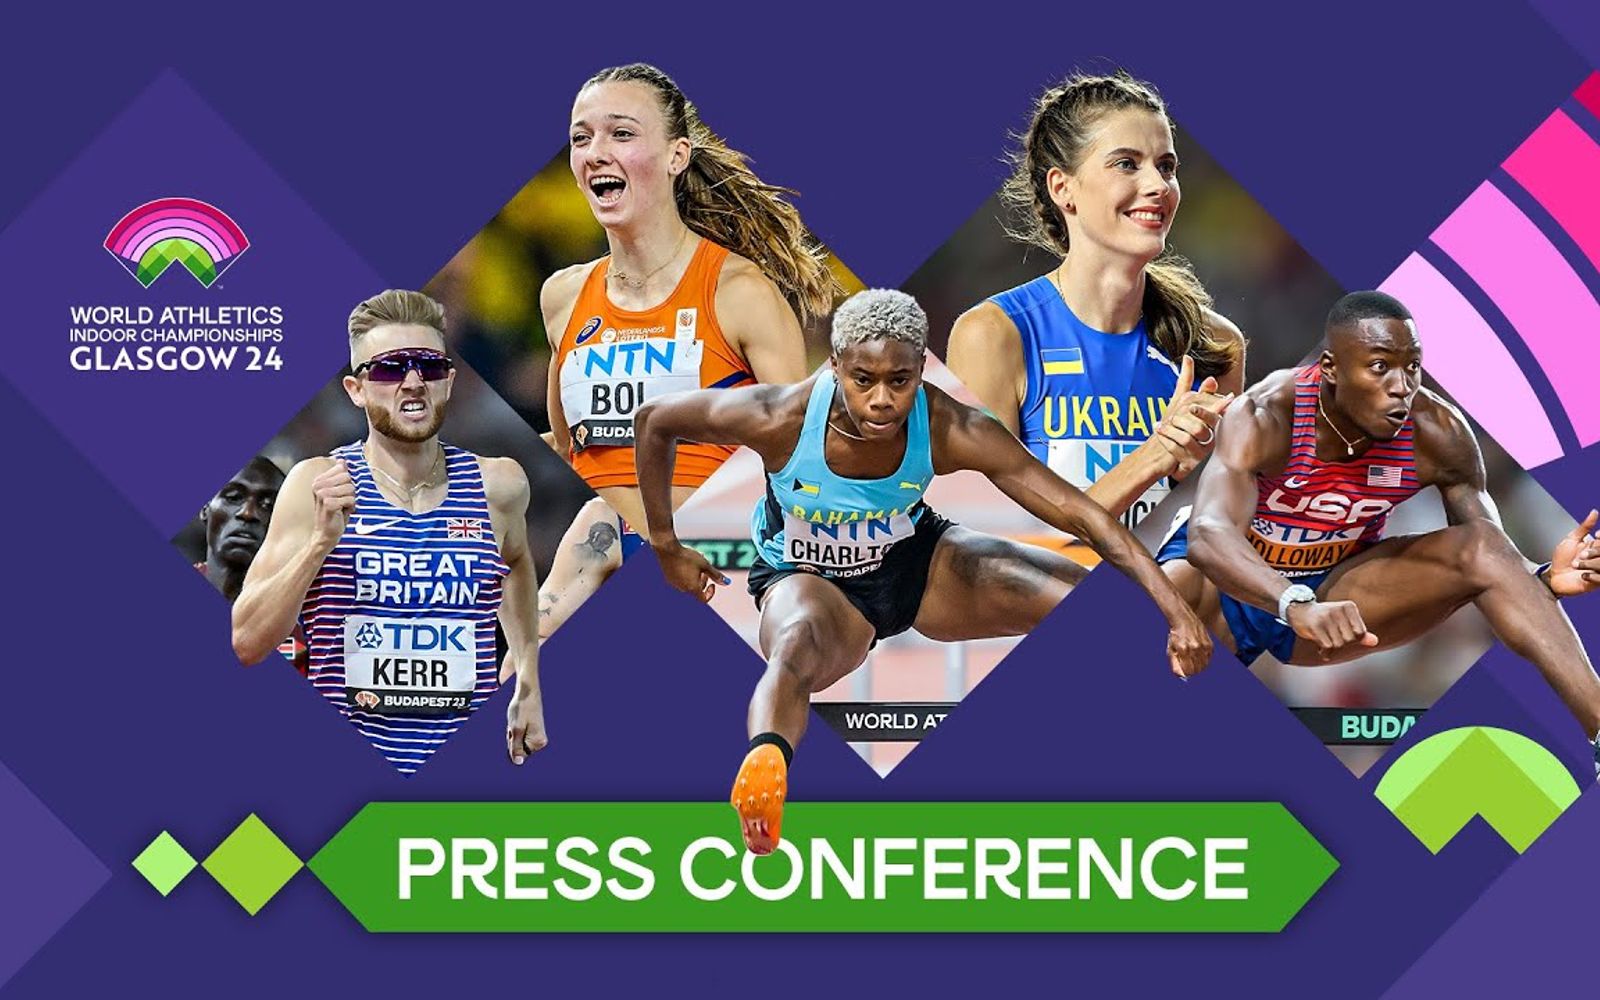 World Athletics Indoor Championships Glasgow 24 Press Conference